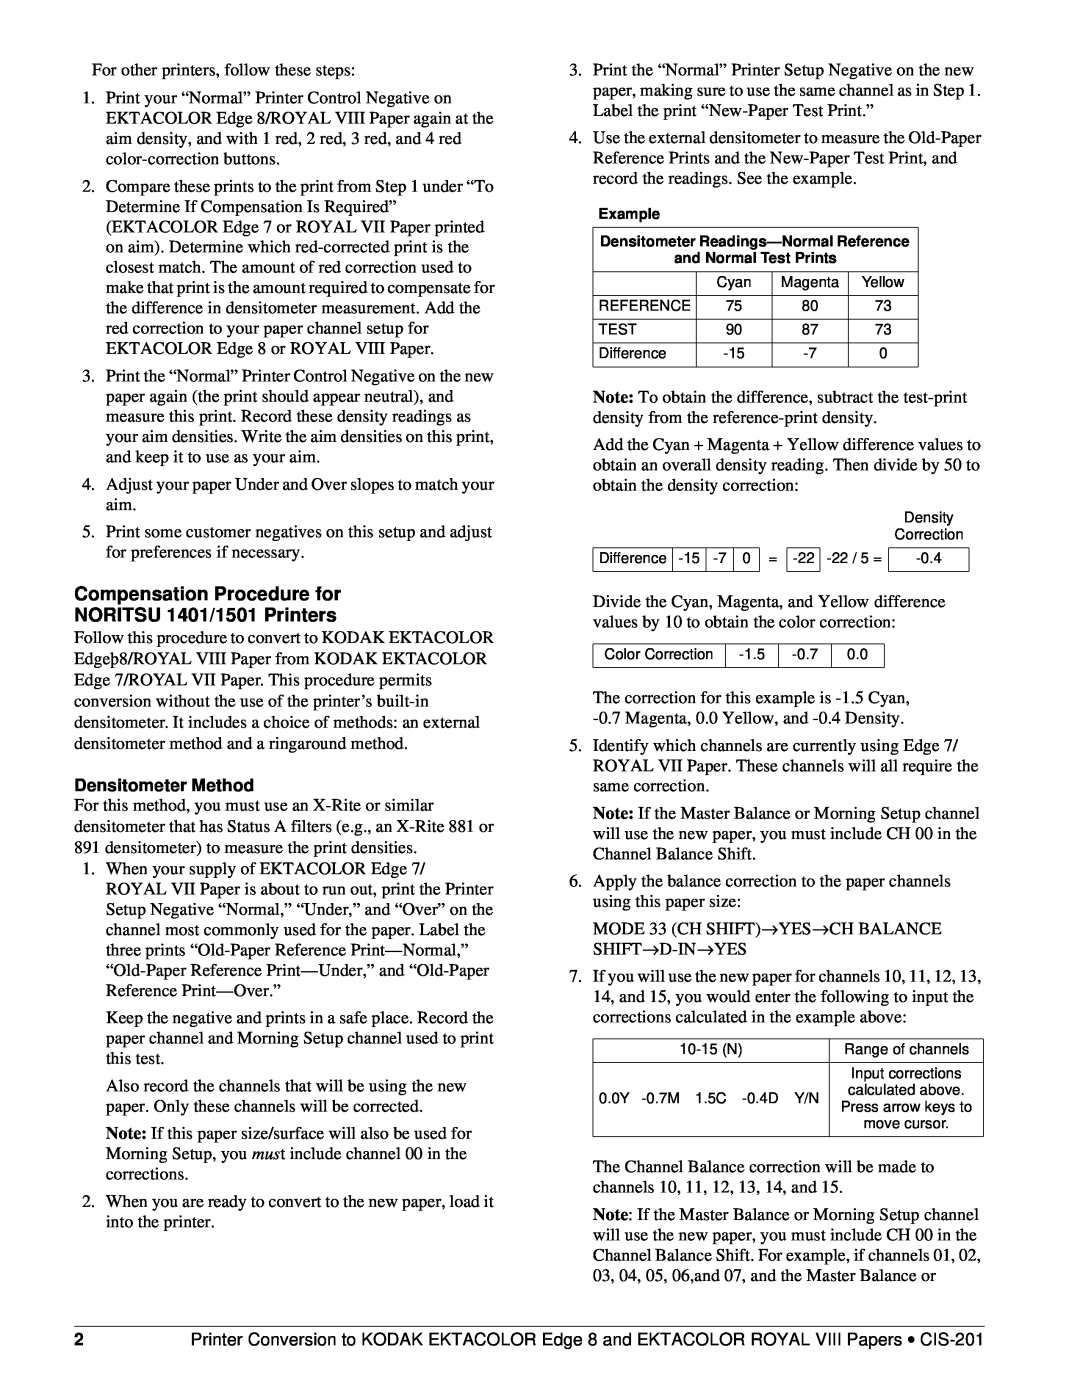 Kodak CIS-201 specifications Compensation Procedure for, NORITSU 1401/1501 Printers, Densitometer Method 